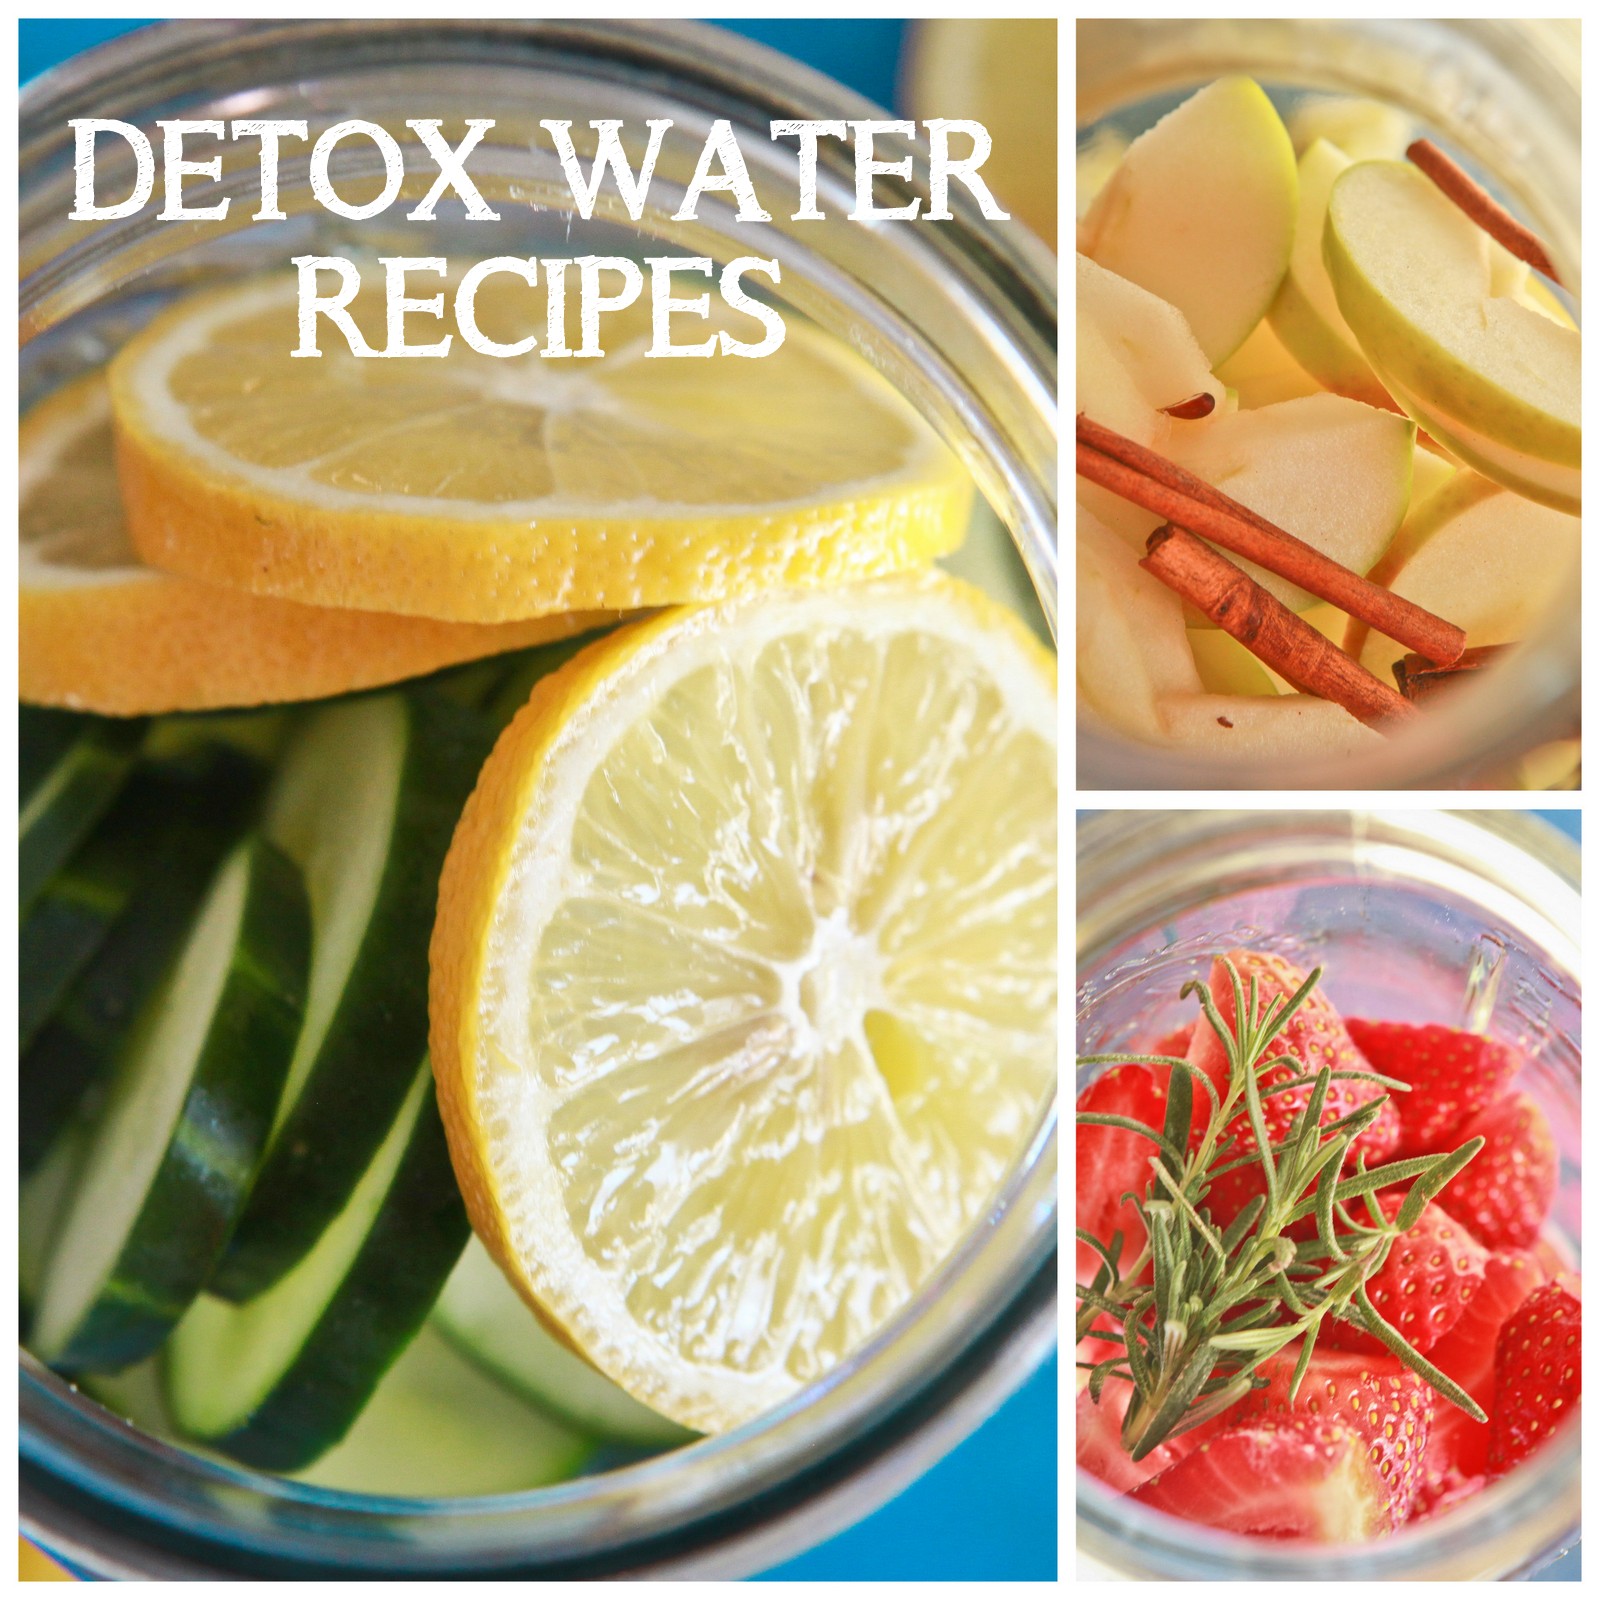 detox water recipes by kojo-designs